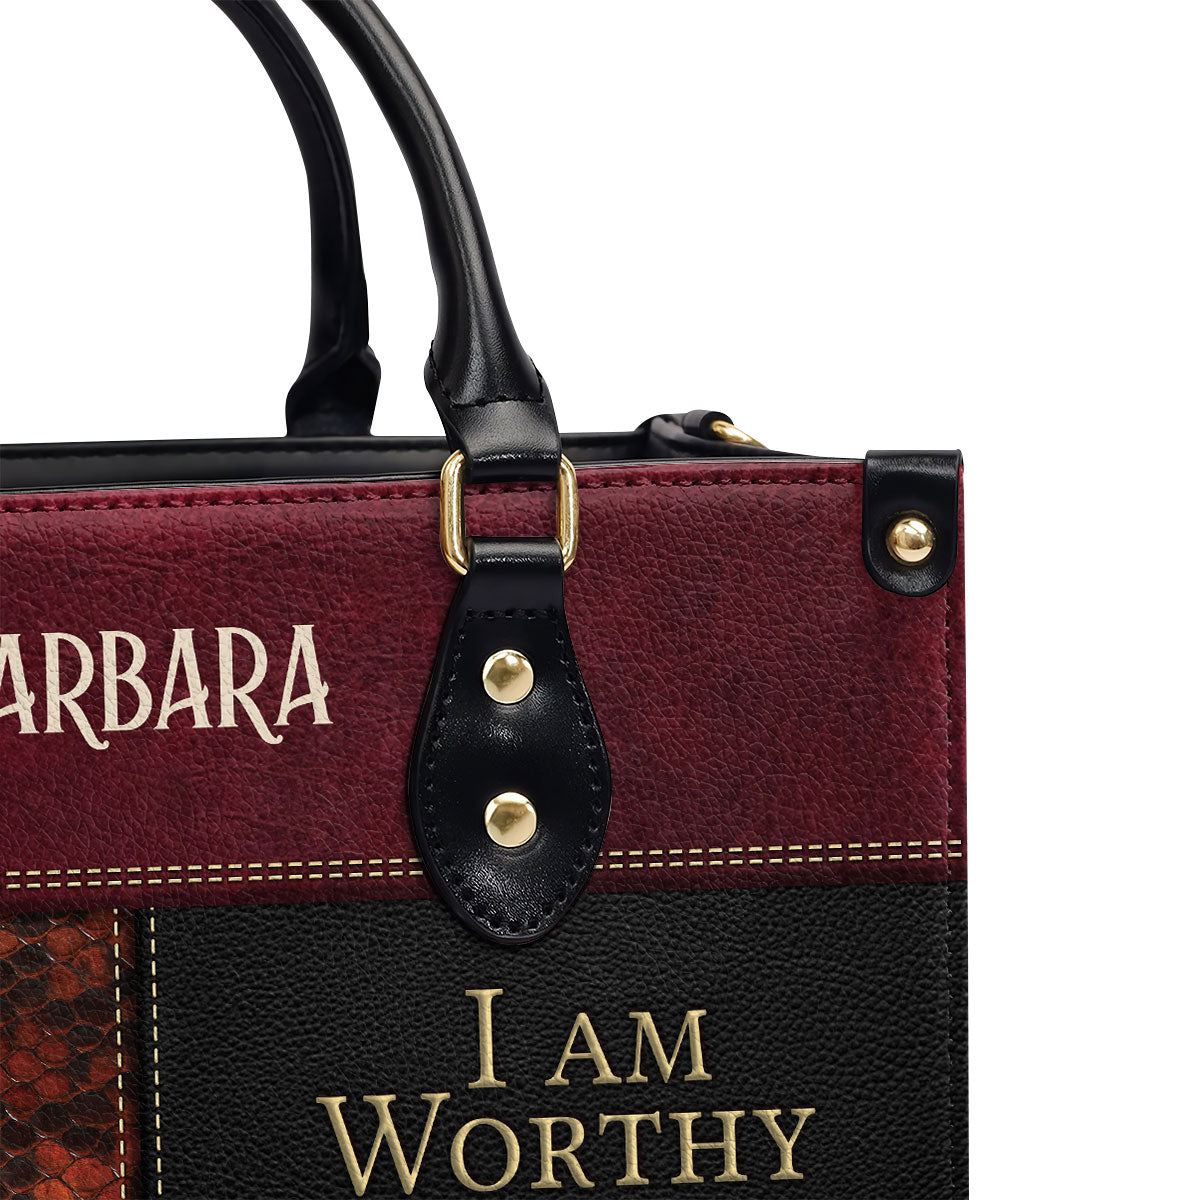 I Am Strong, I Am Worthy - Special Christian Leather Handbag NUHN282